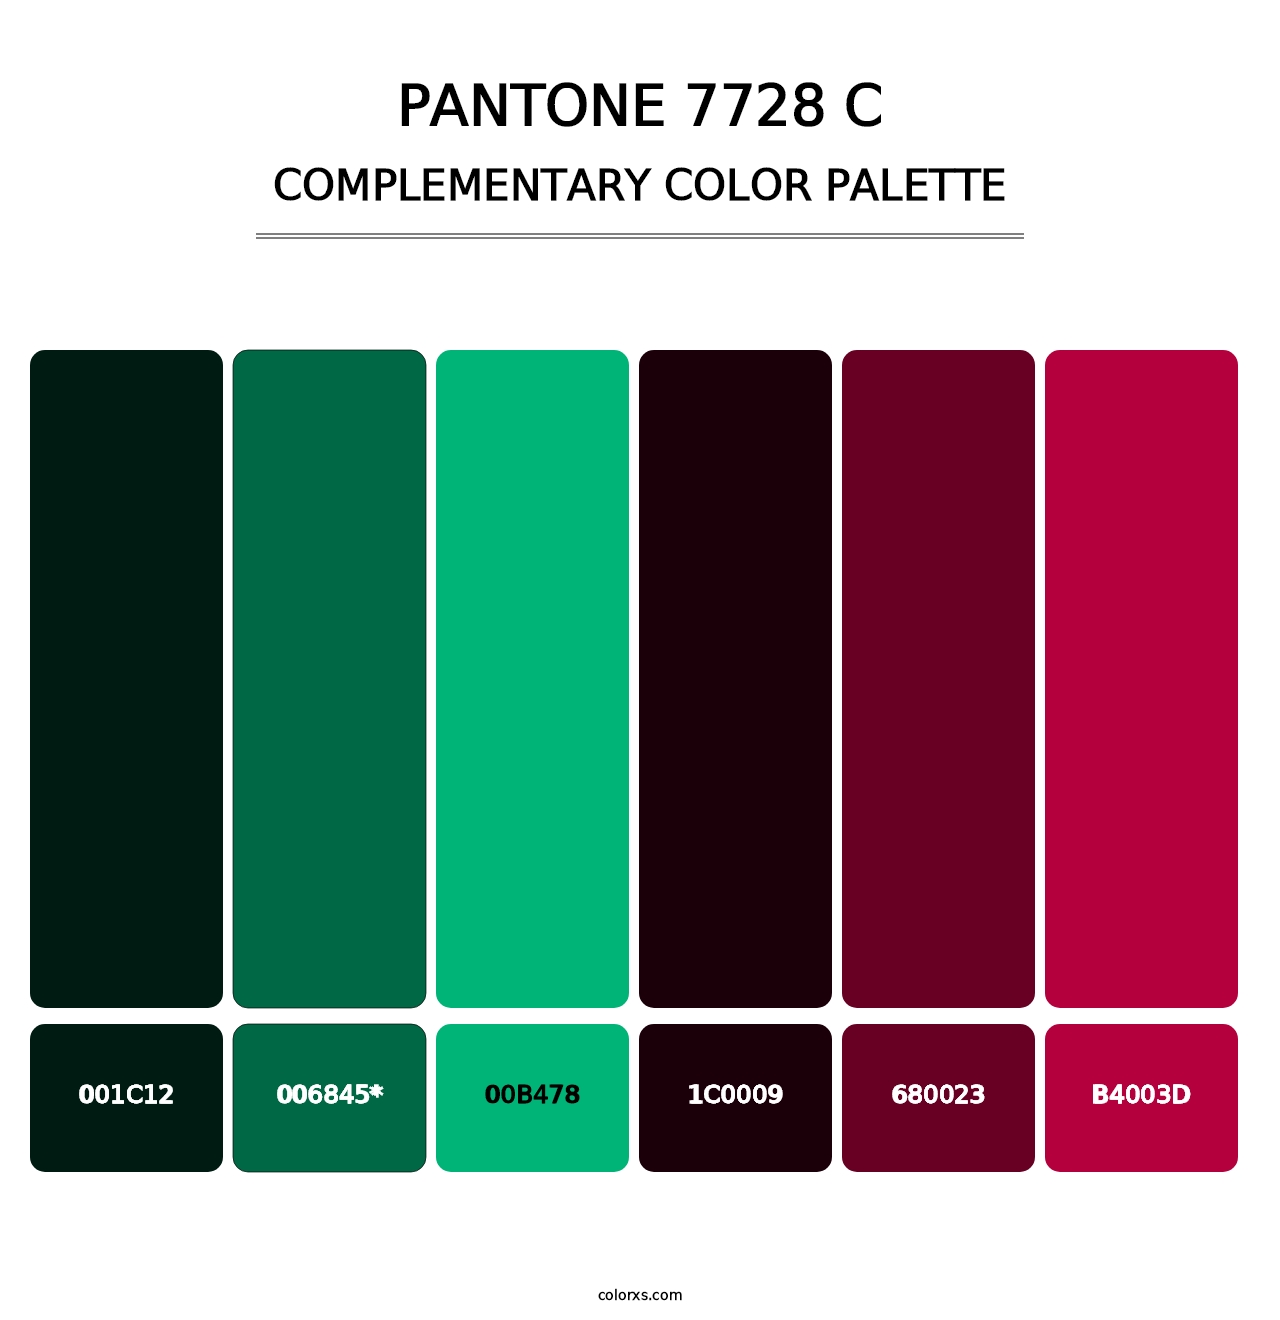 PANTONE 7728 C - Complementary Color Palette